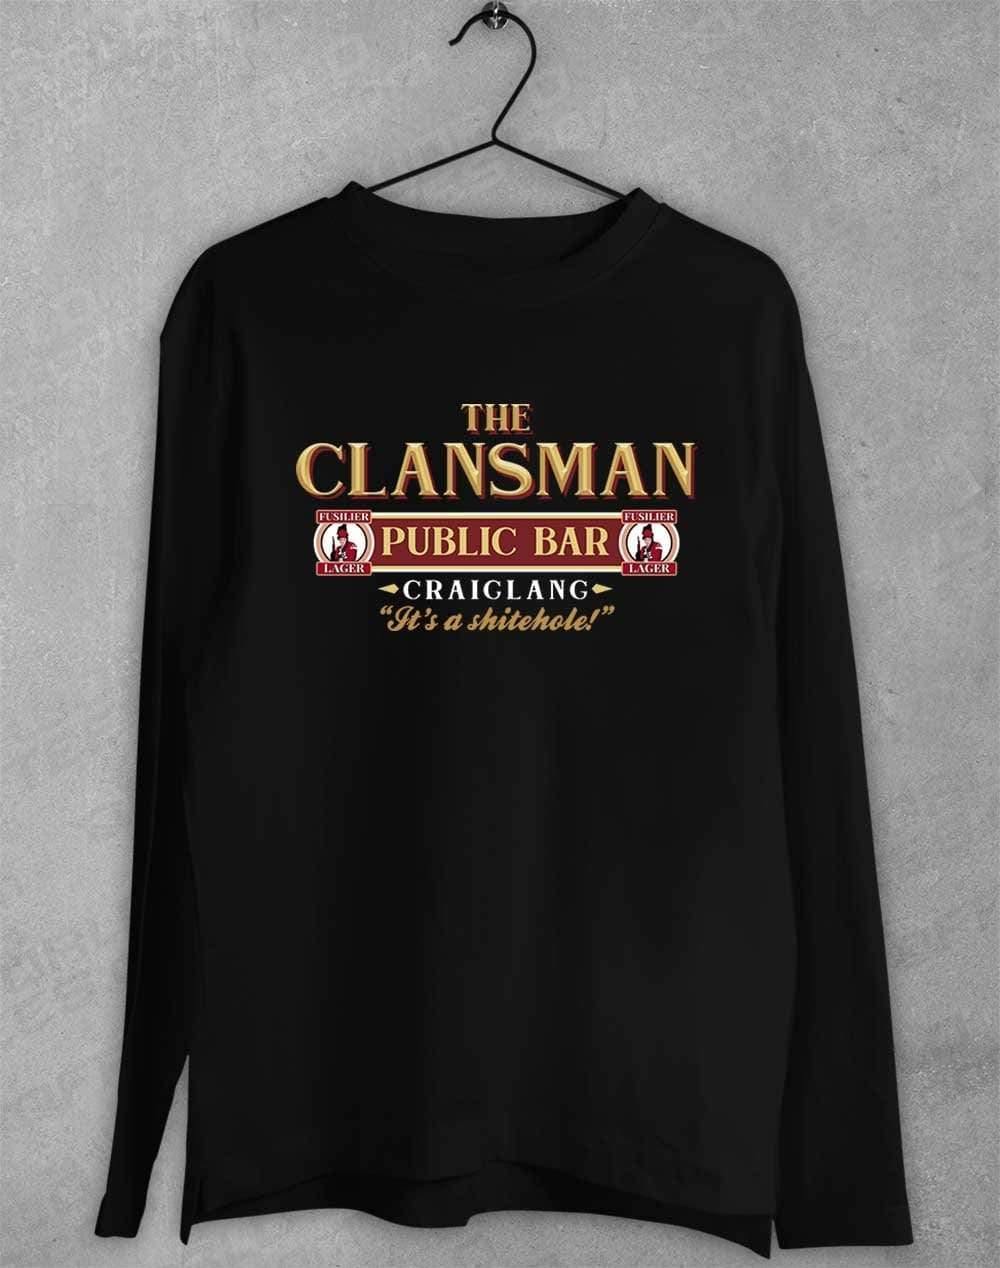 The Clansman Craiglang Long Sleeve T-Shirt S / Black  - Off World Tees